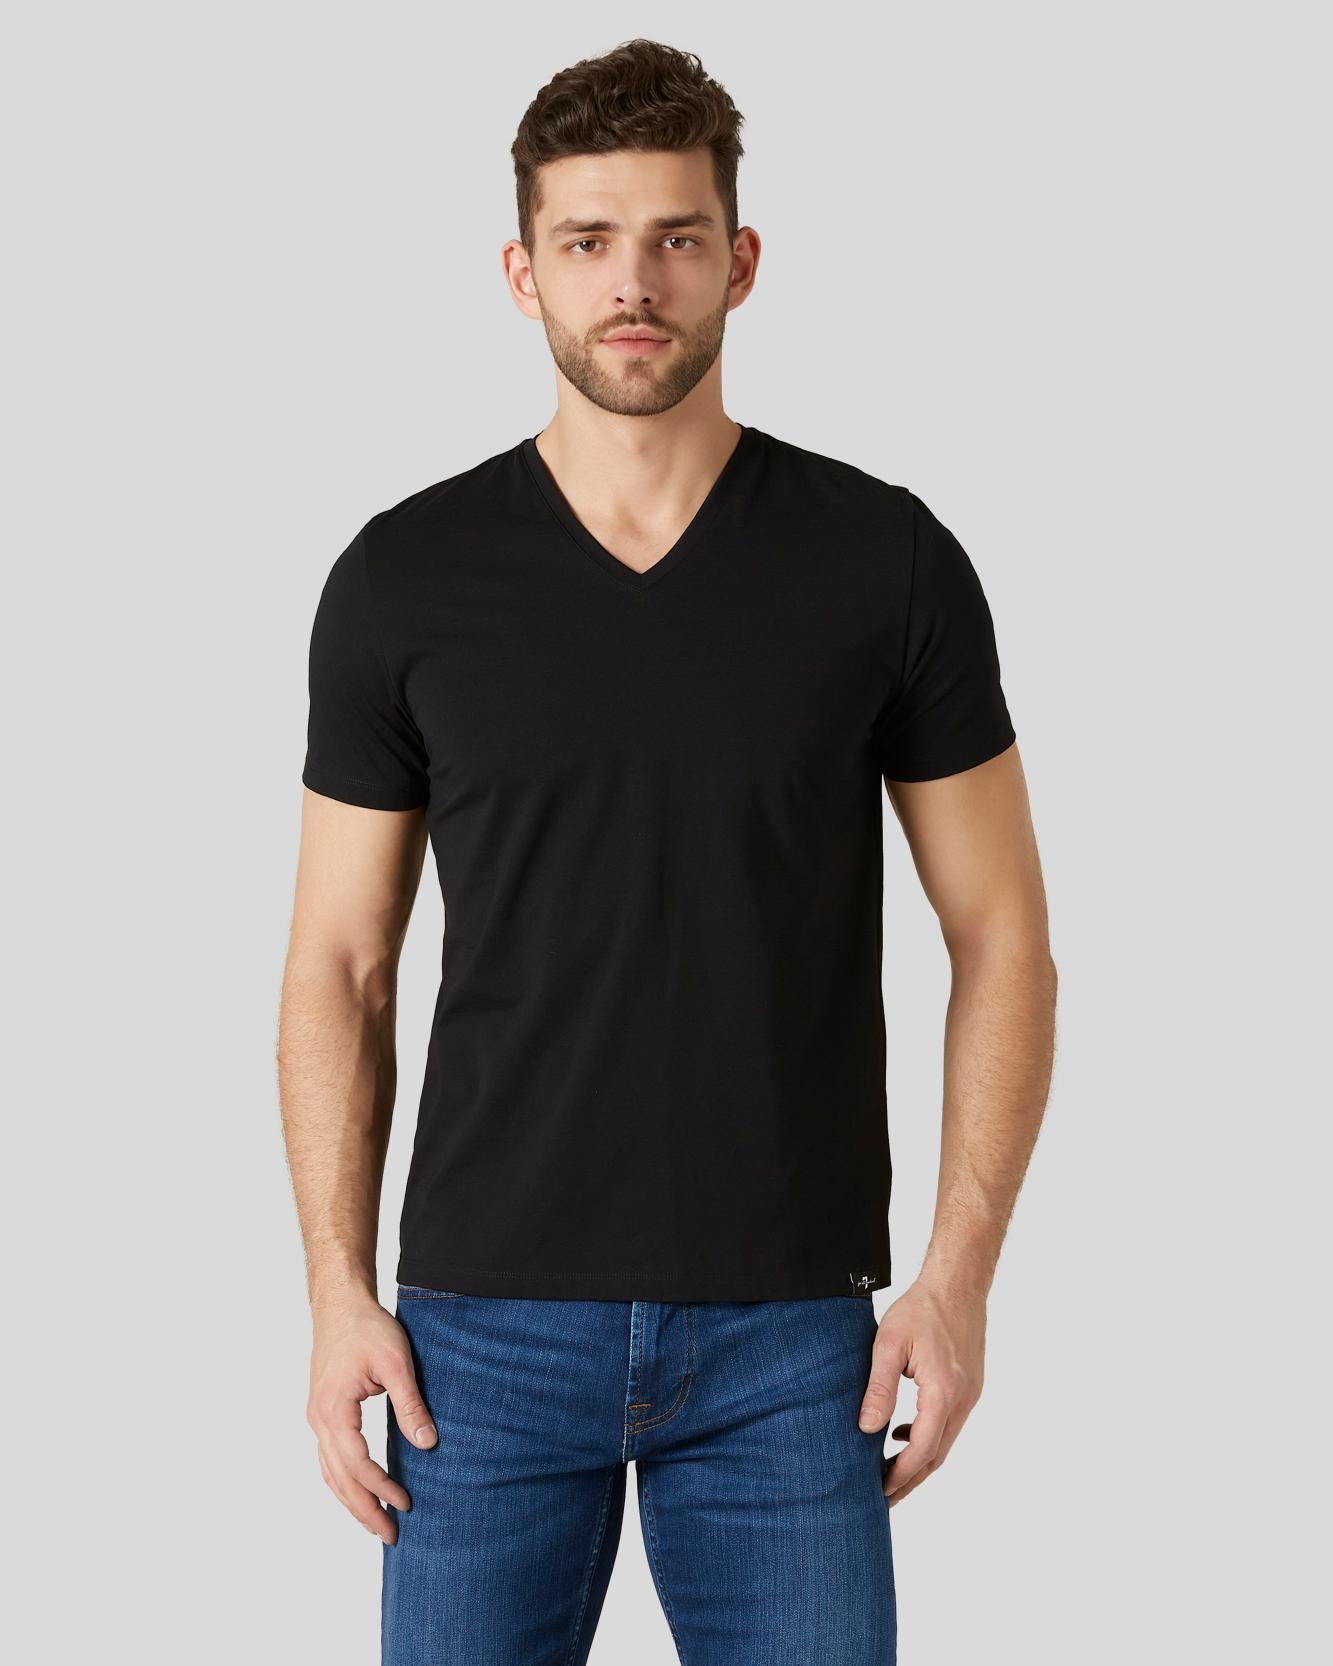 Men's Designer Tees & Long Sleeve Shirts